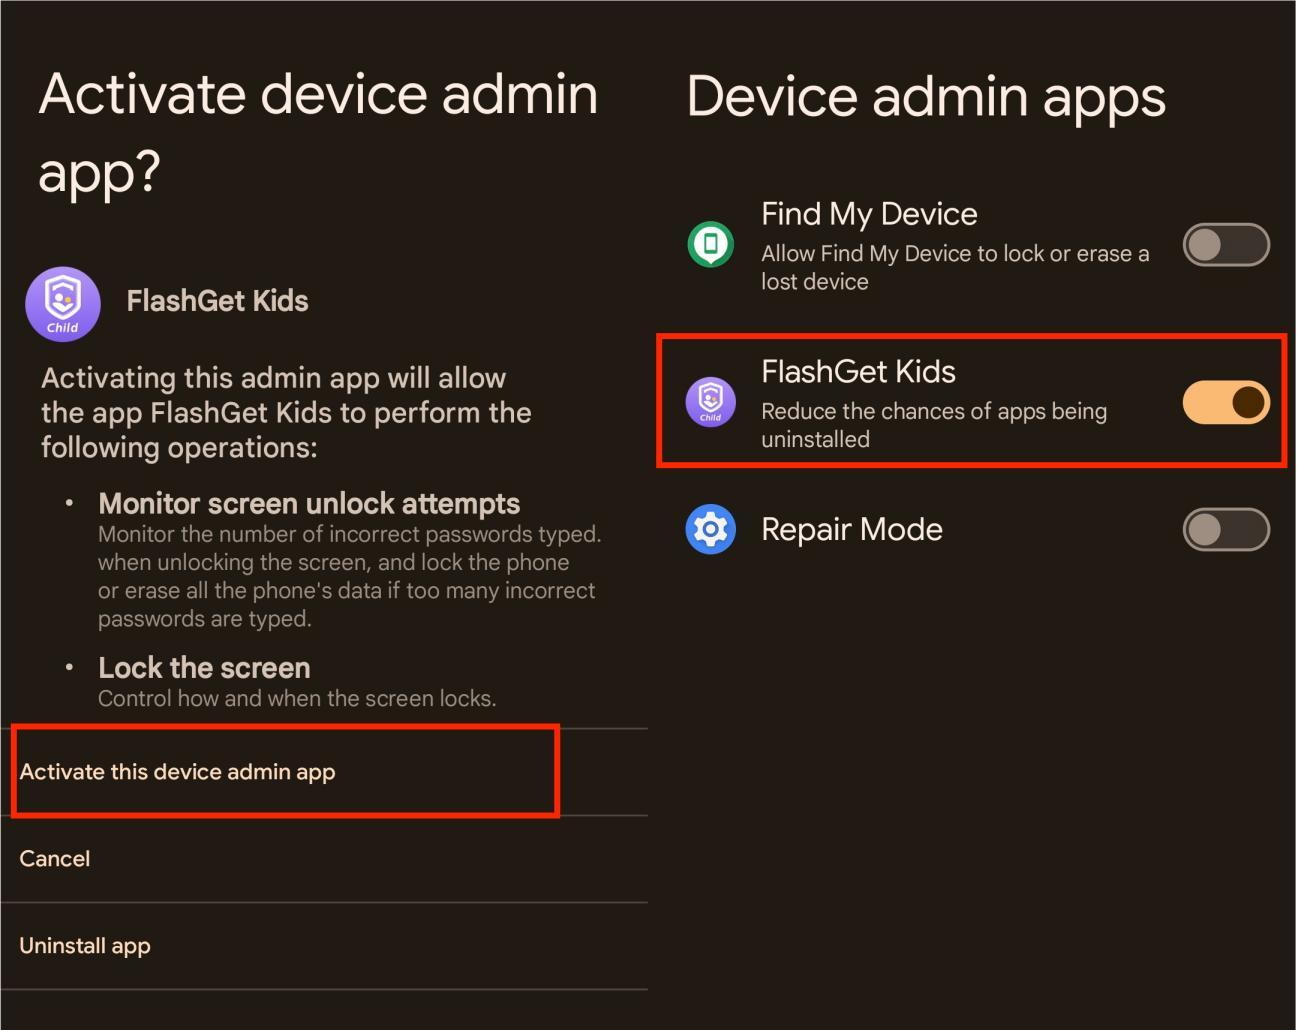 Activate device admin app